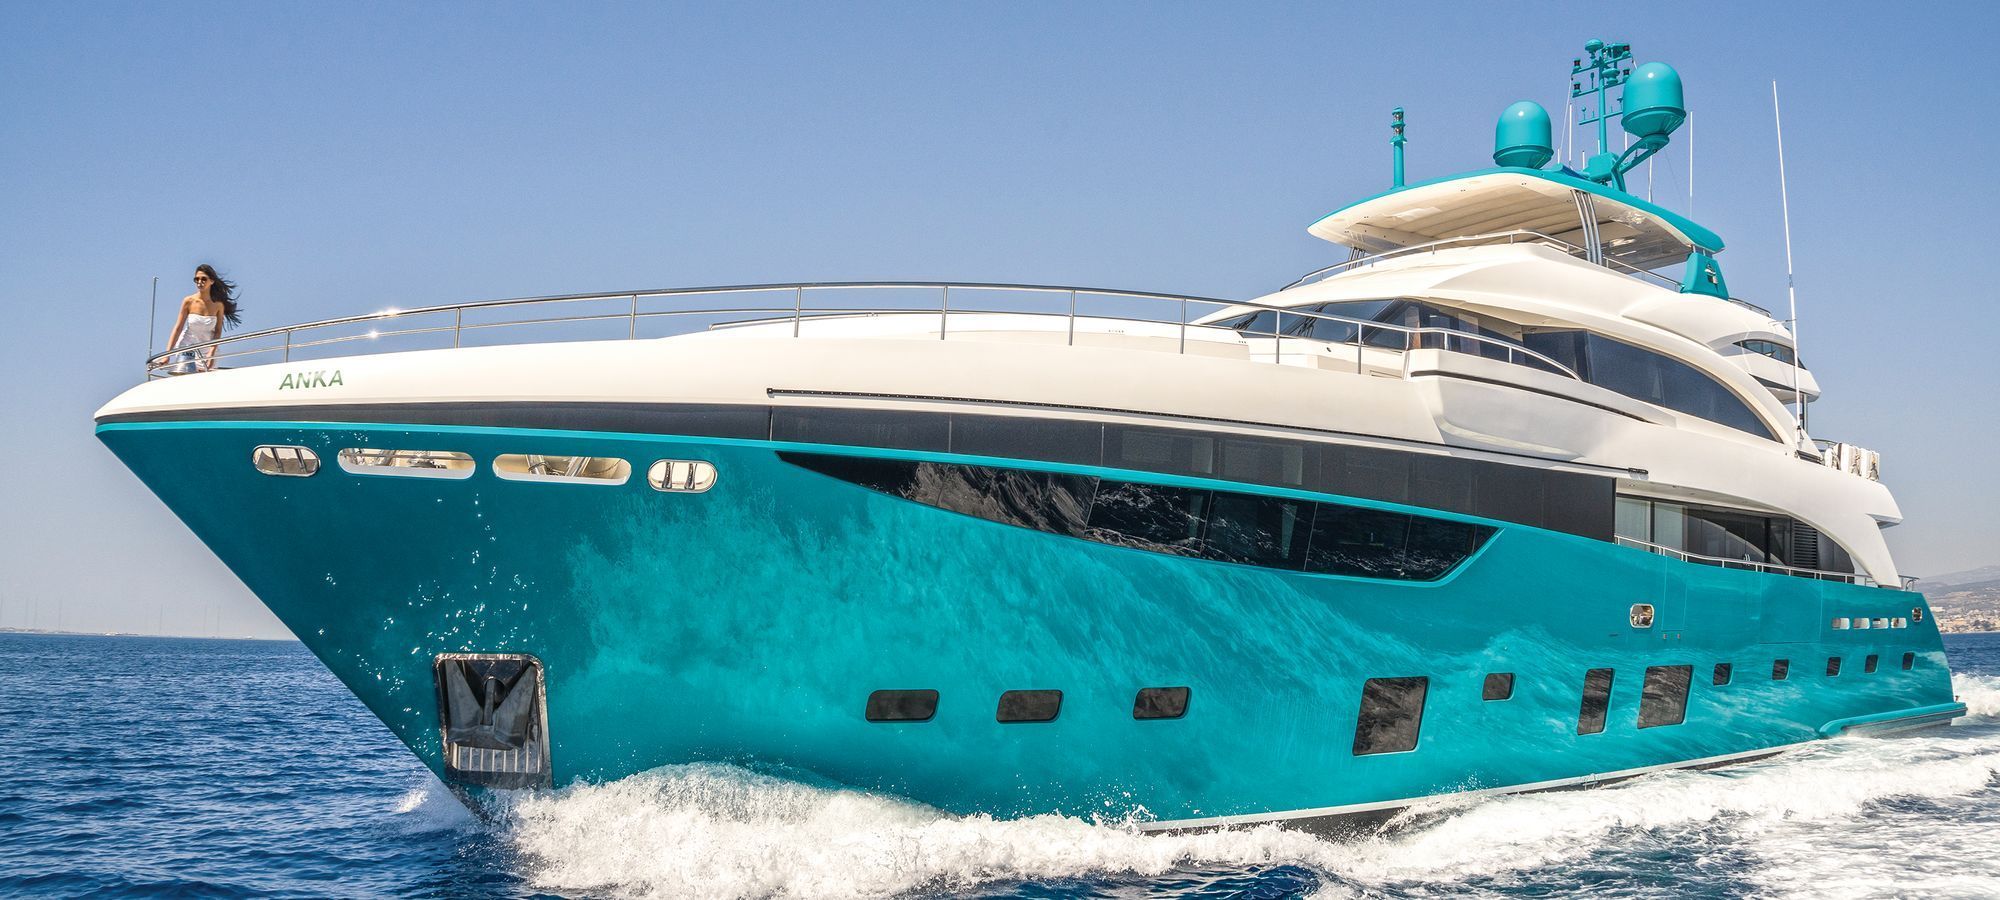 PRINCESS YACHTS Στις luxurious καμπίνες του superyacht Anka μιλούν ελληνικά! - Φωτογραφία 2